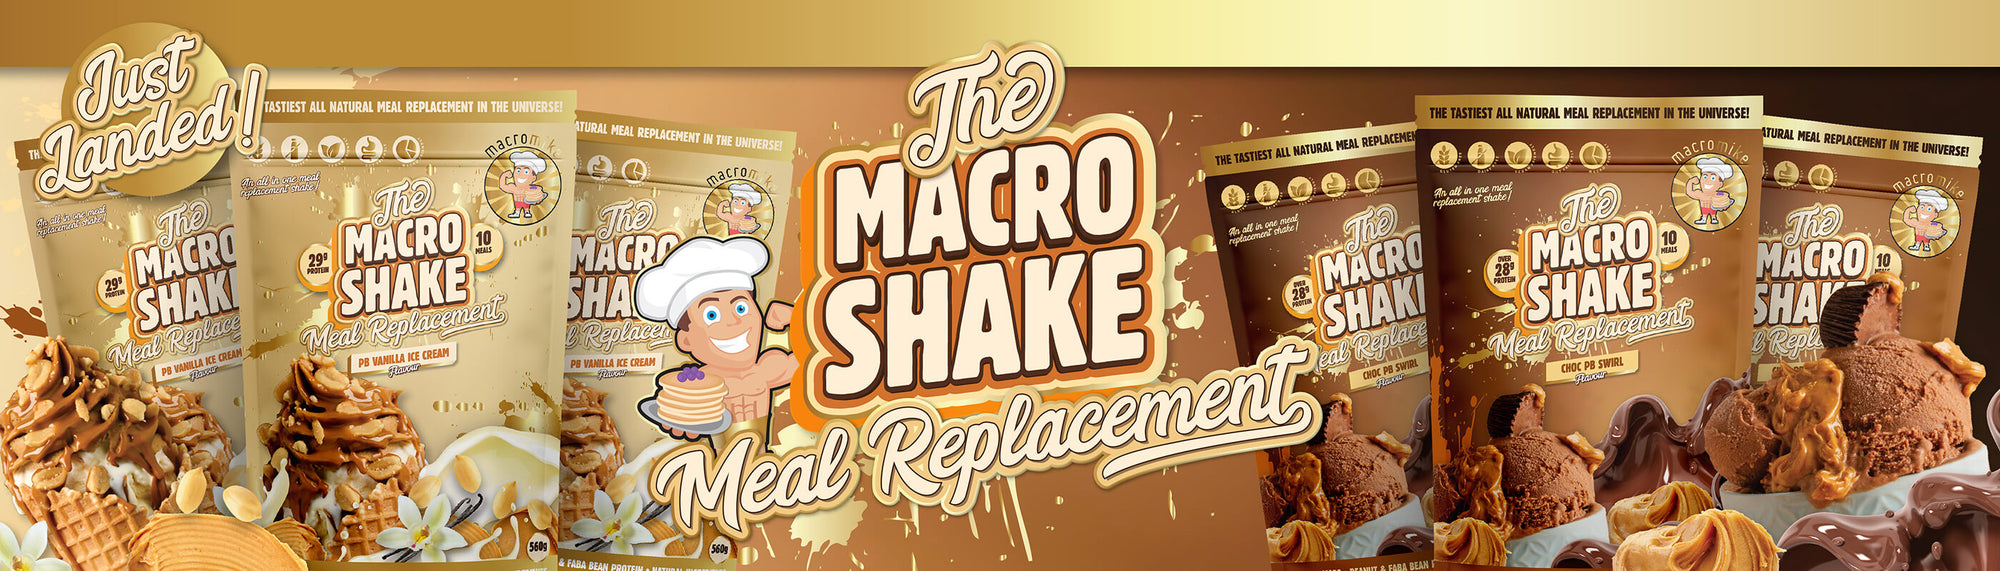 Macro Mike Macro Shake Banner